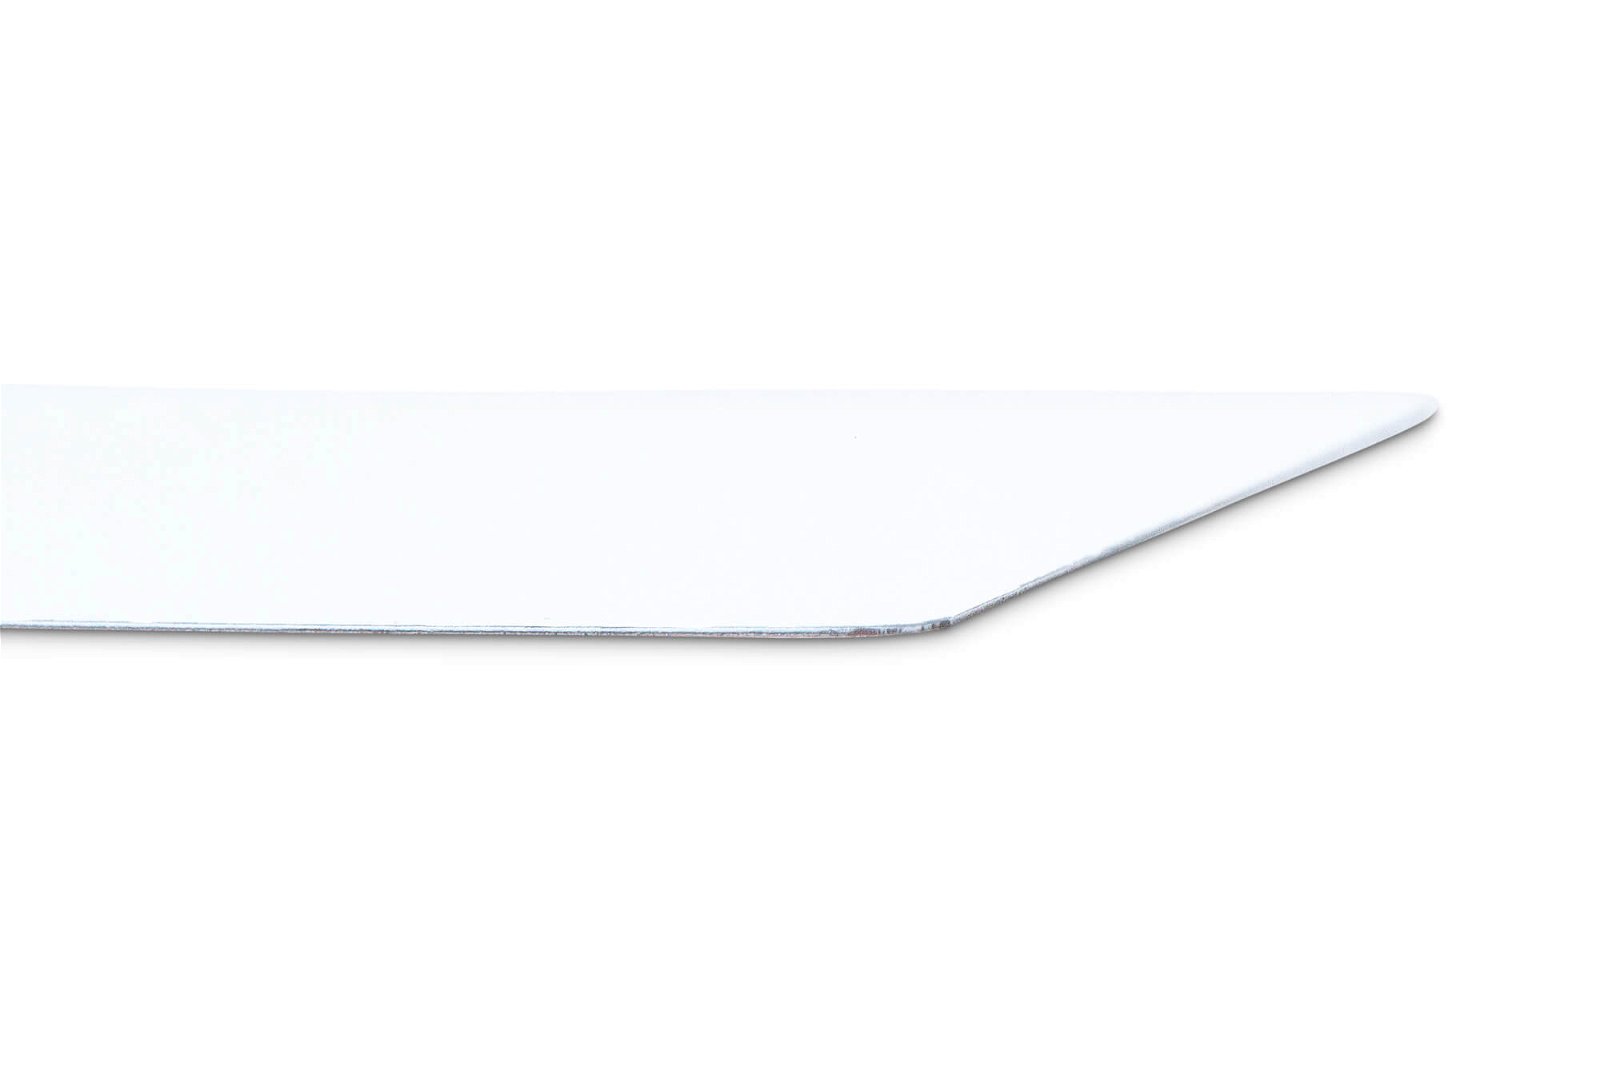 Ferroleiste MAULstandard, Länge 100 cm, inkl. 4 Magnete, weiß